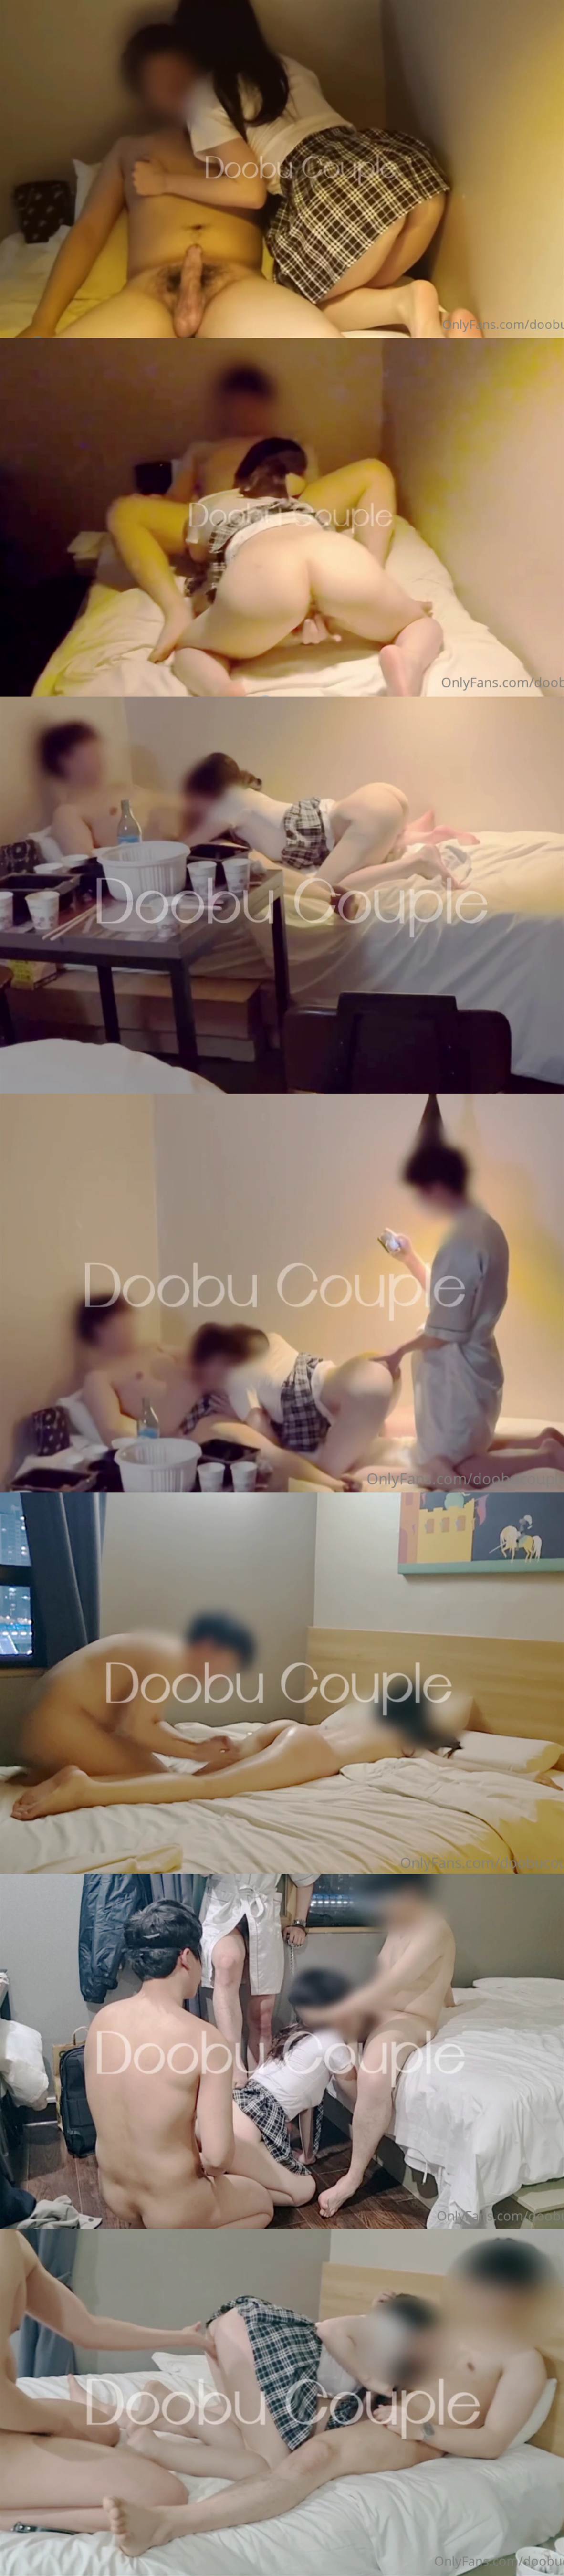 OnlyFans@Doobu couple [6v/3.08g]-1